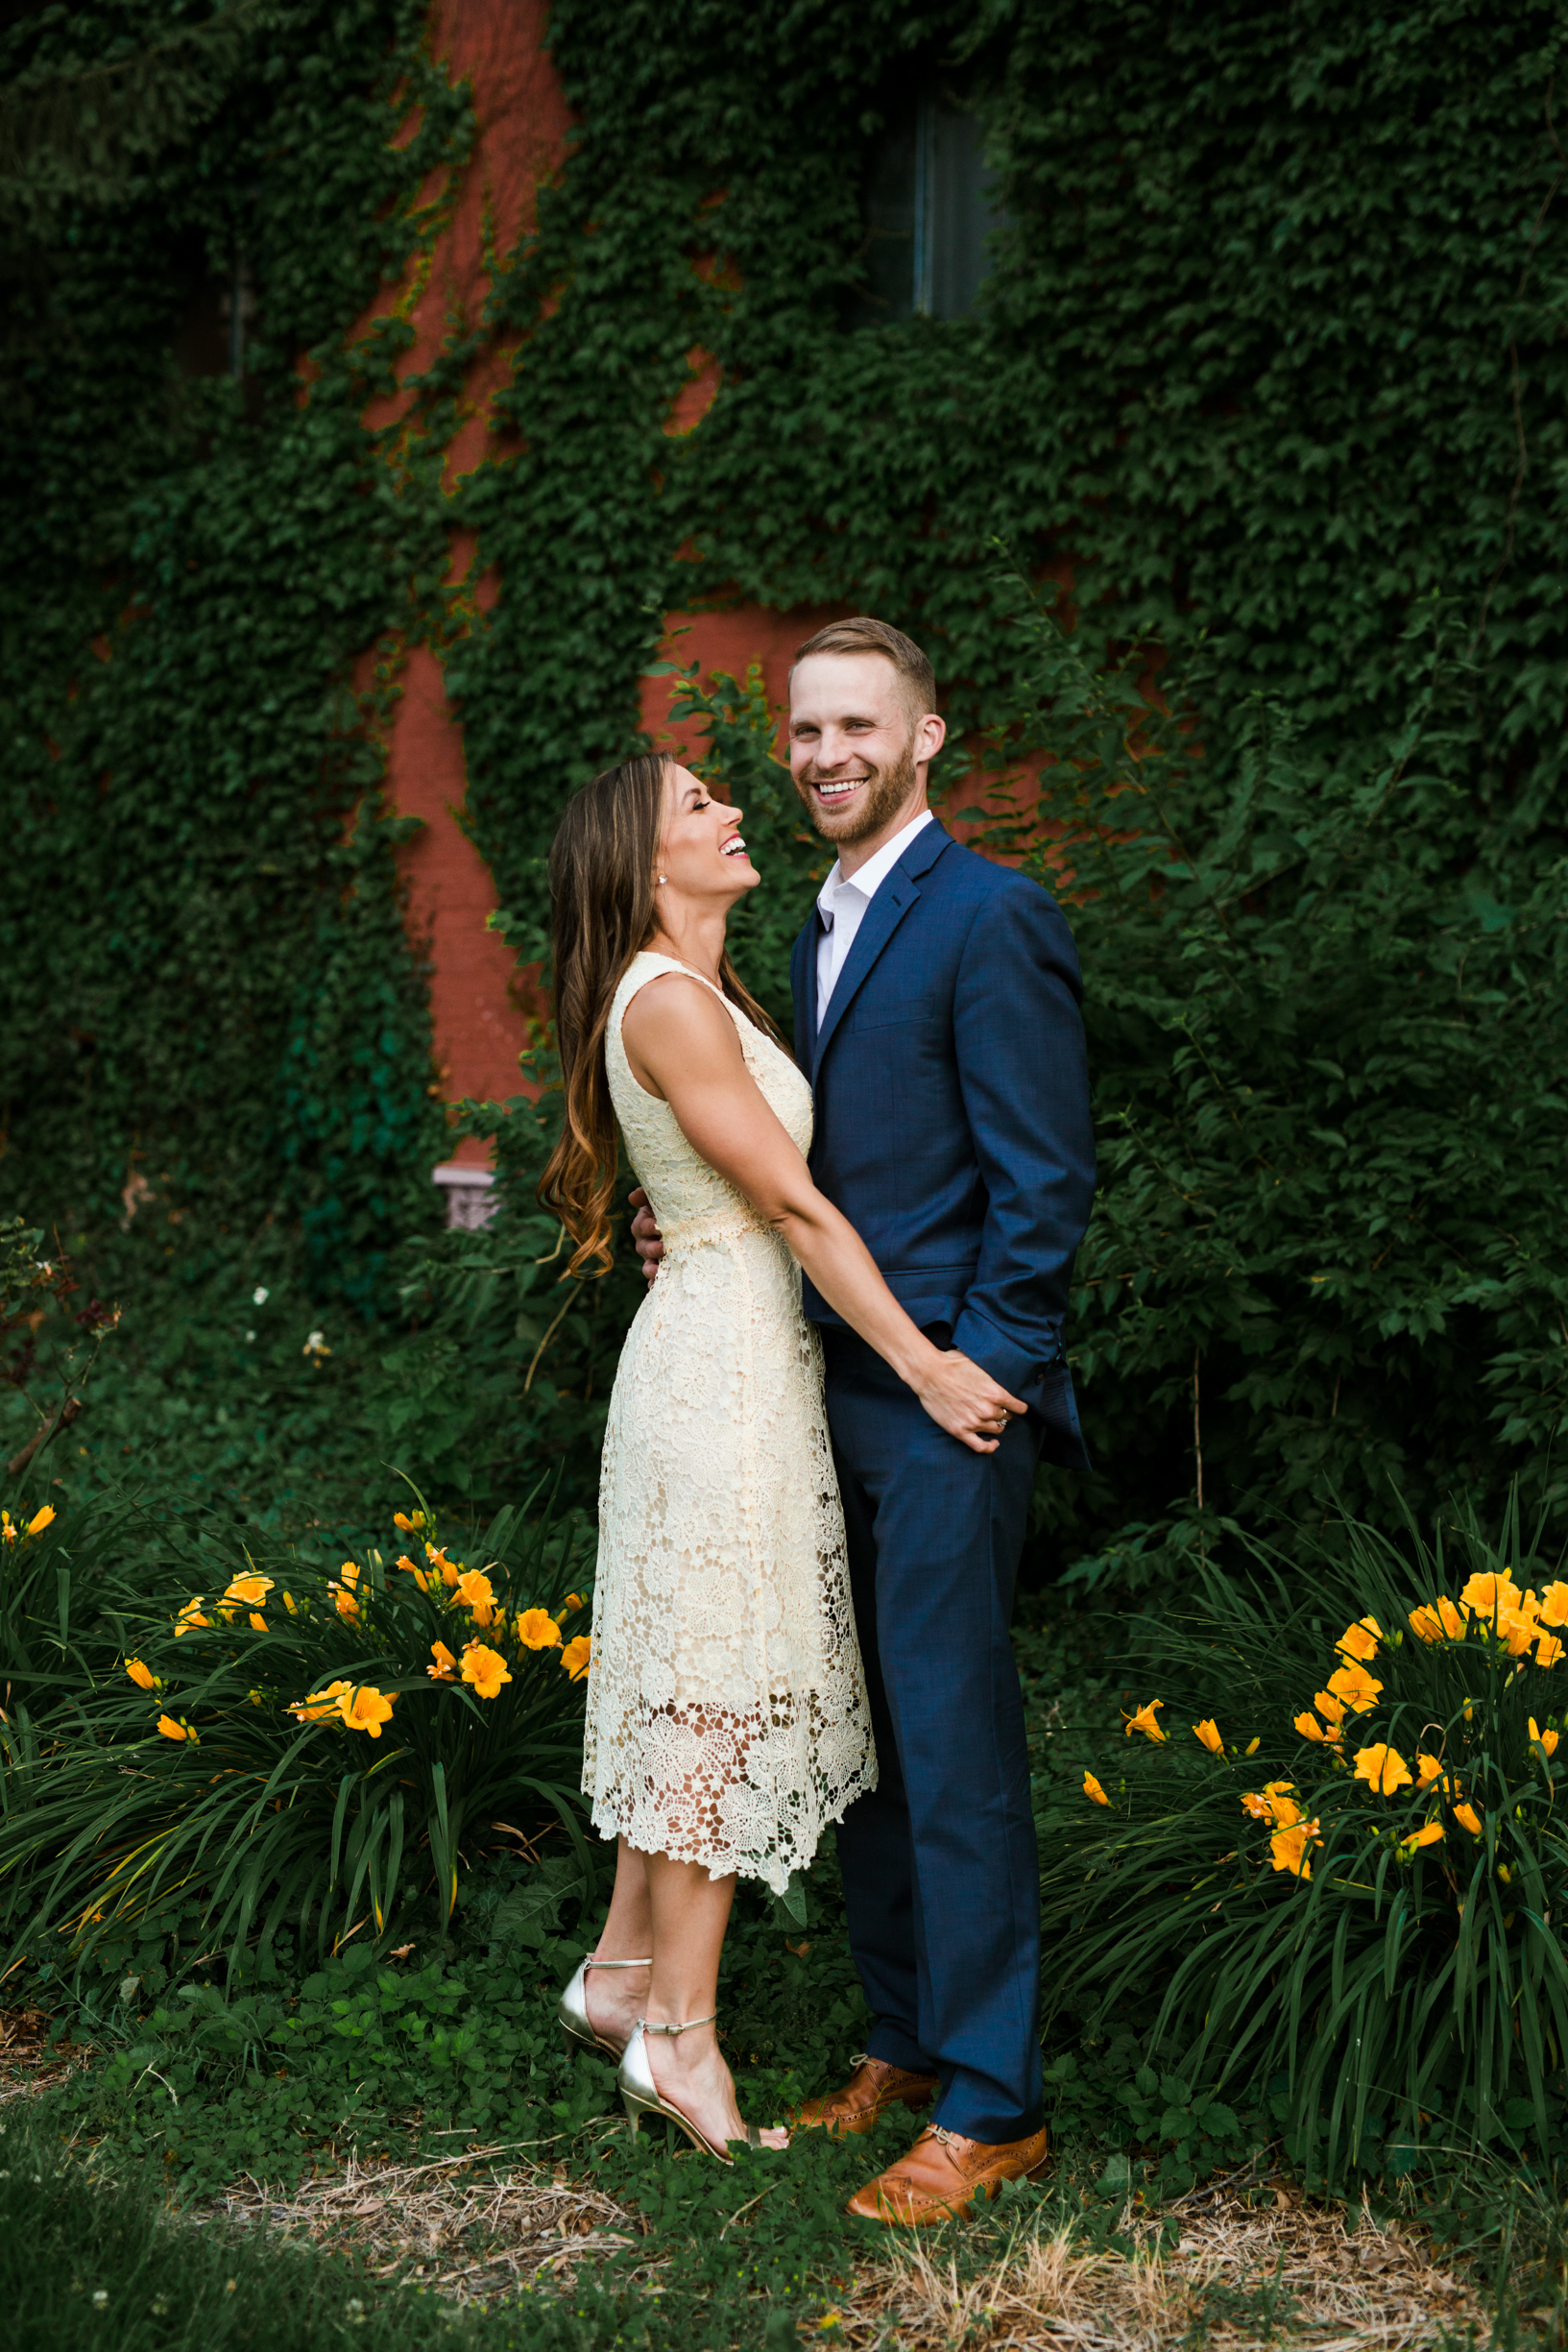 Victoria & Chad Engagement 2018 Crystal Ludwick Photo Louisville Kentucky Wedding Photographer WEBSITE (41 of 48).jpg